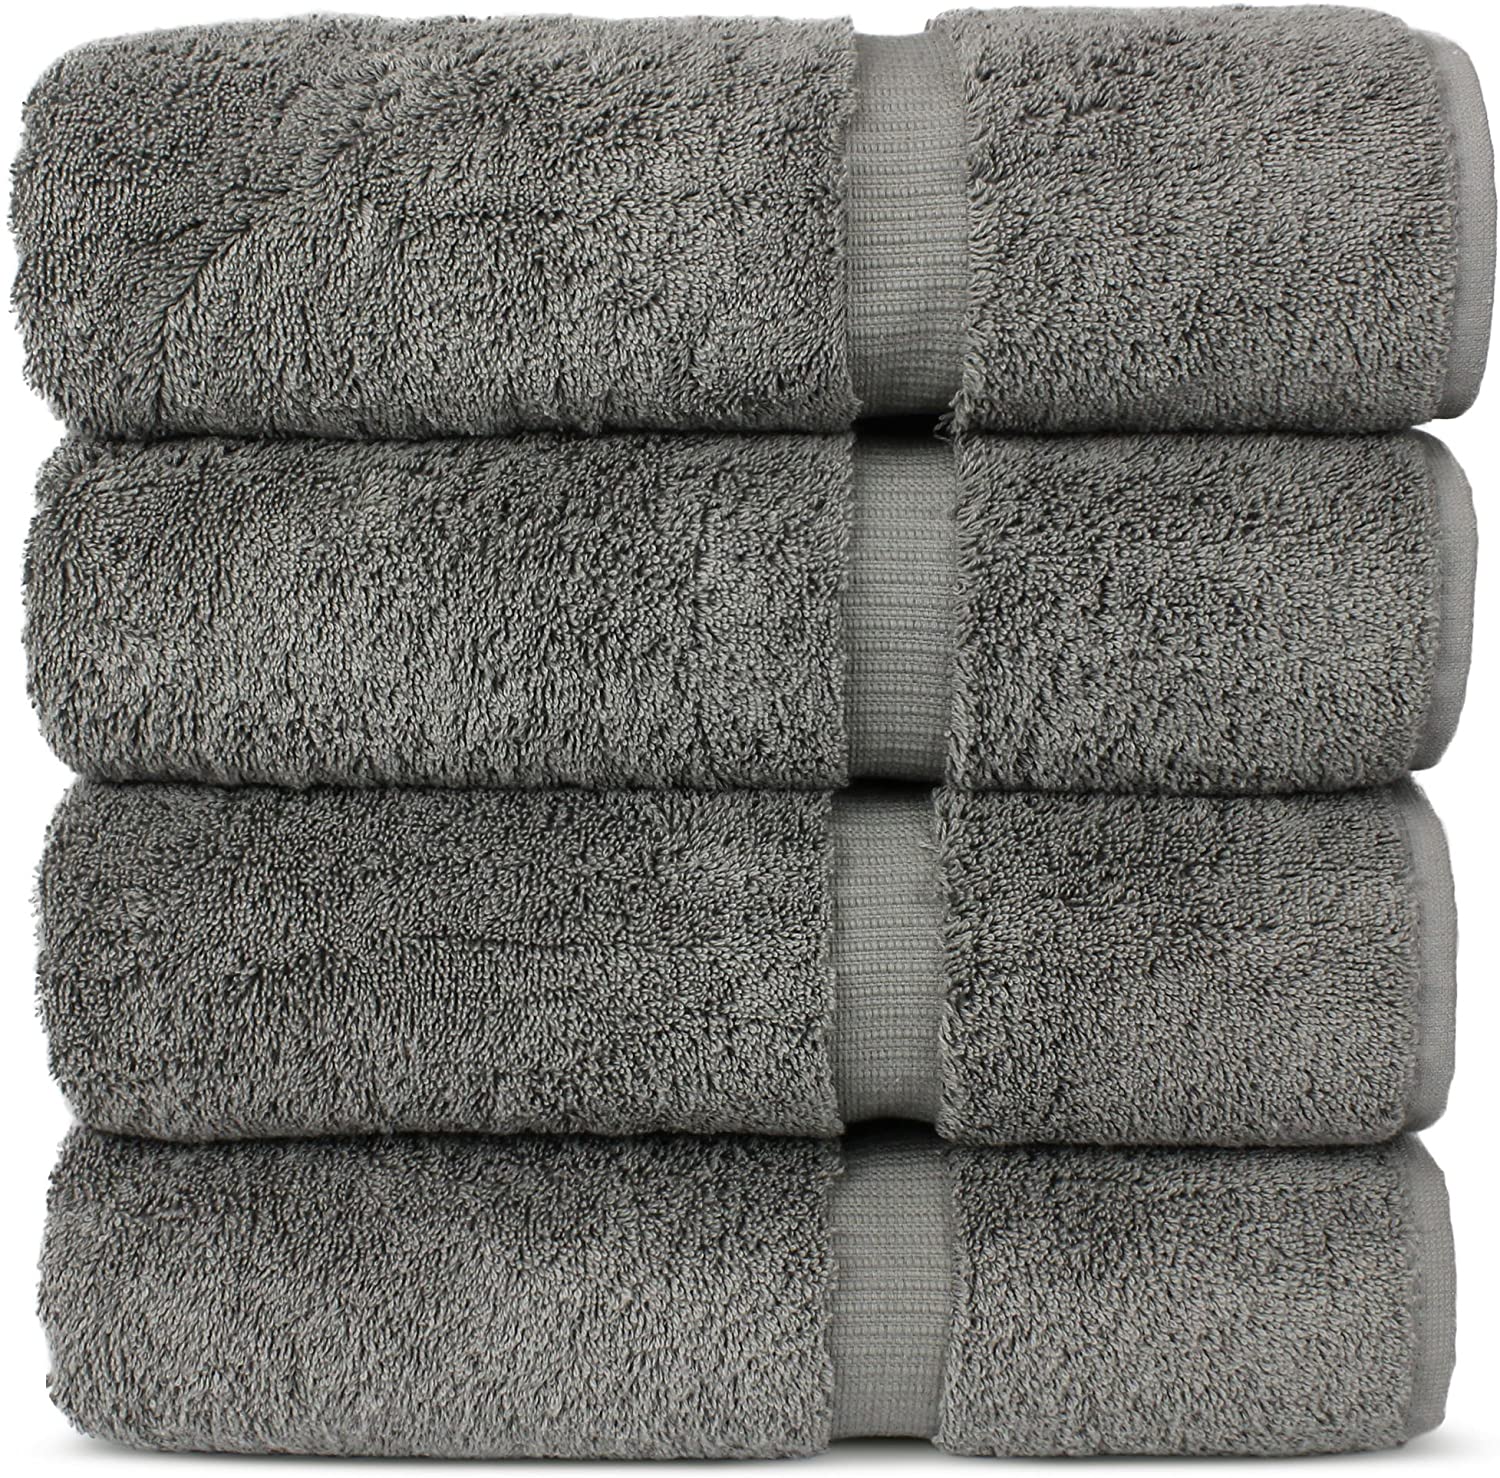 Beige Linens Limited 100/% Turkish Cotton 500gsm Hand Towel